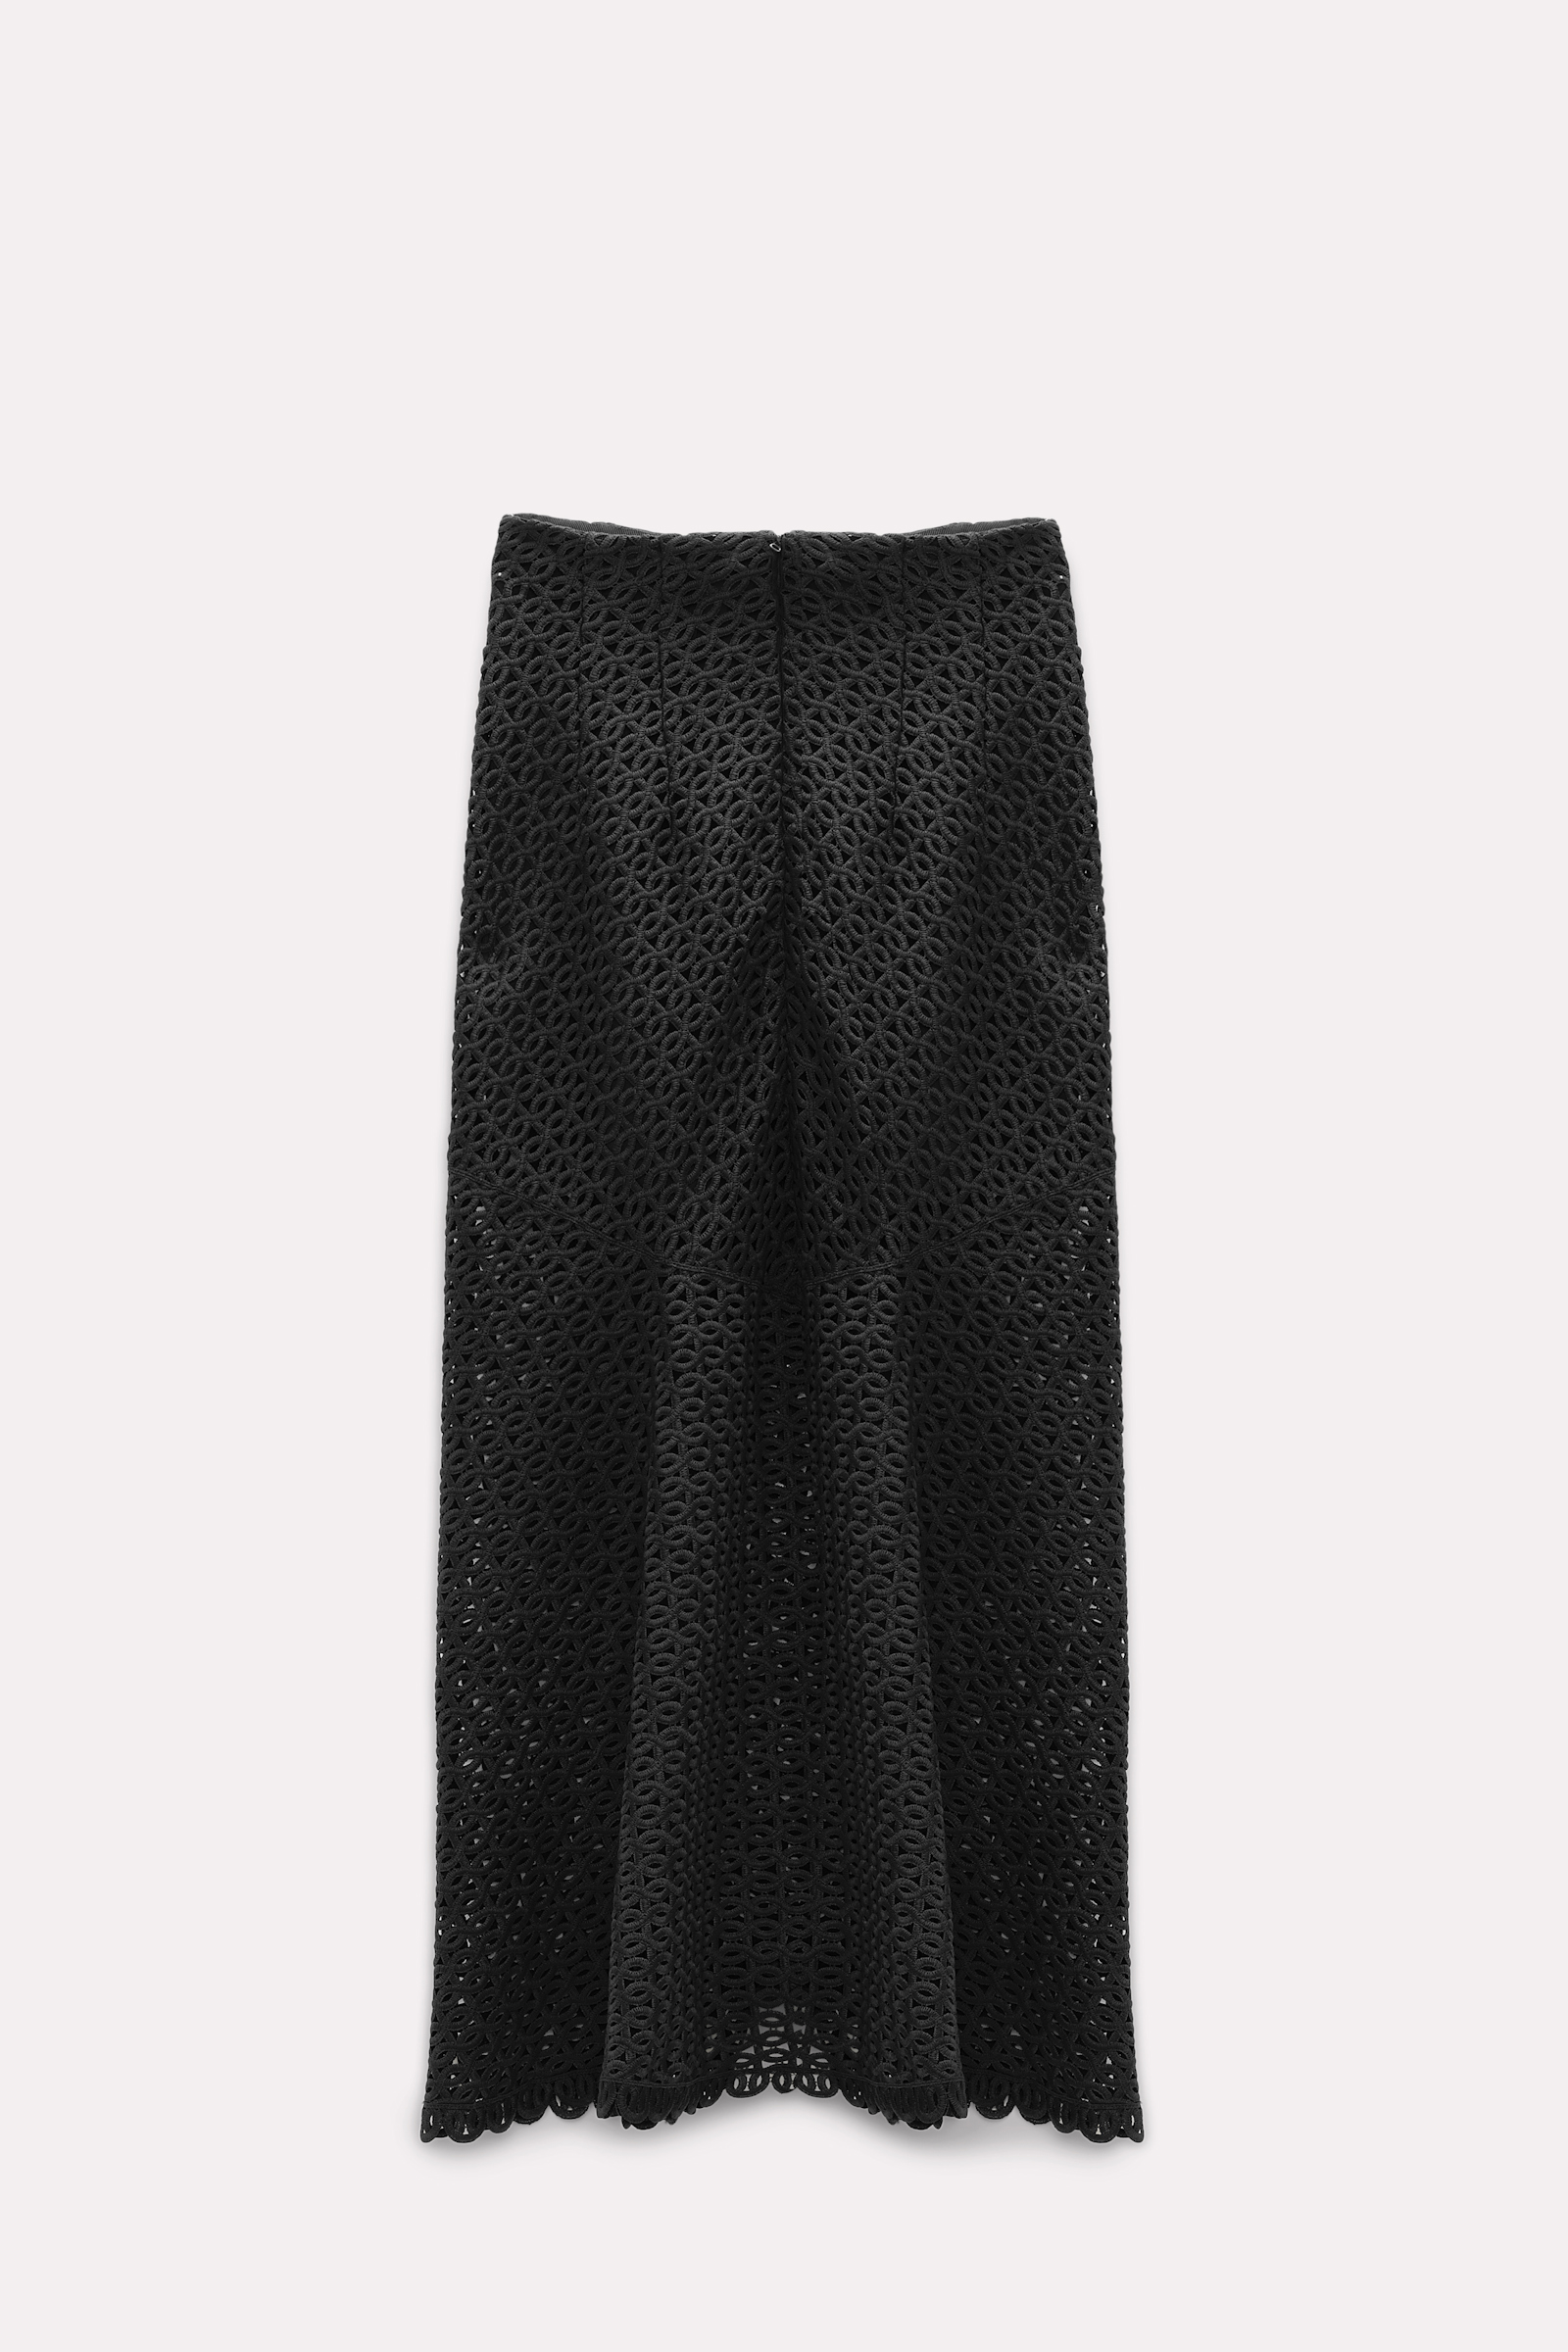 Dorothee Schumacher Macramé lace skirt pure black